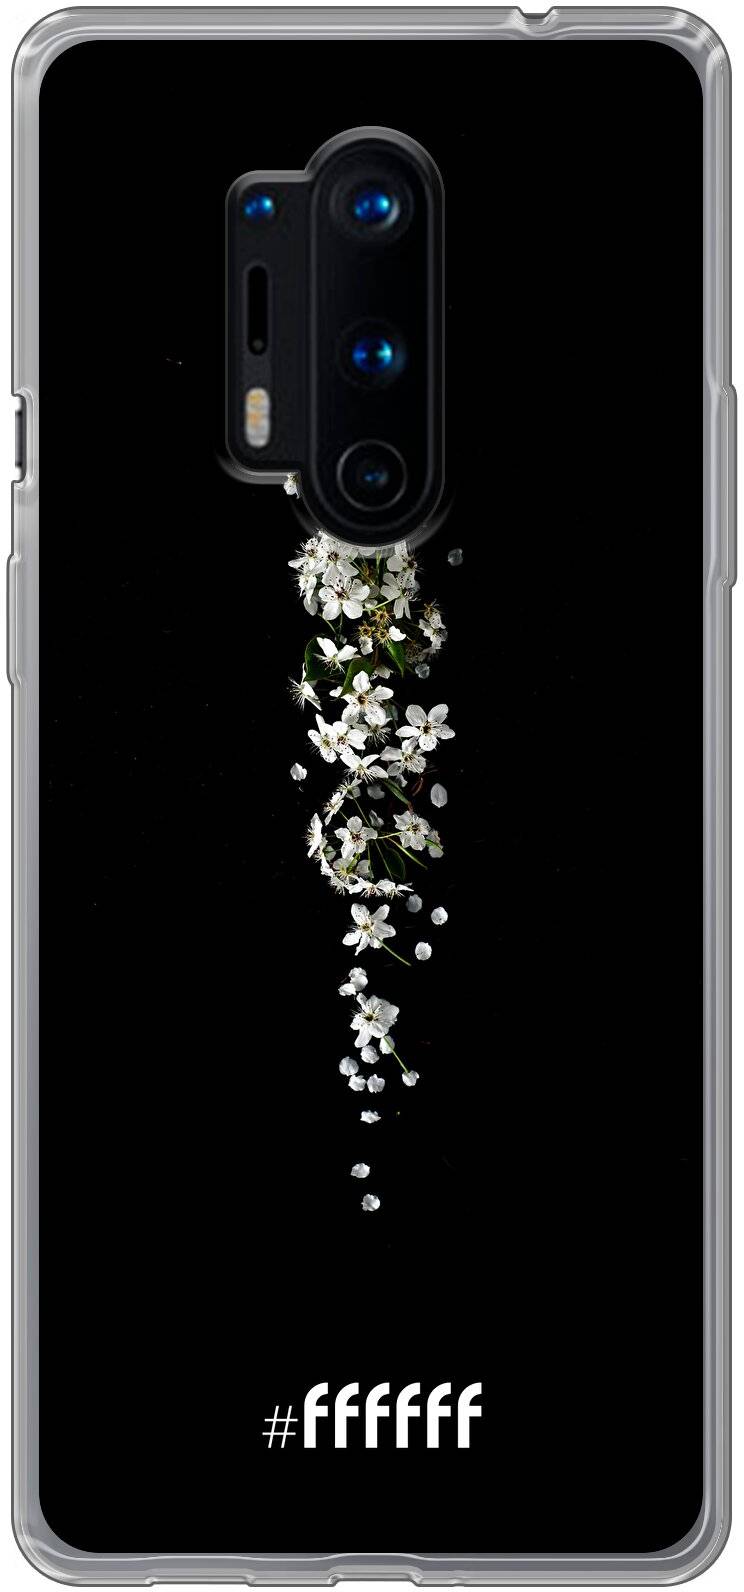 White flowers in the dark 8 Pro